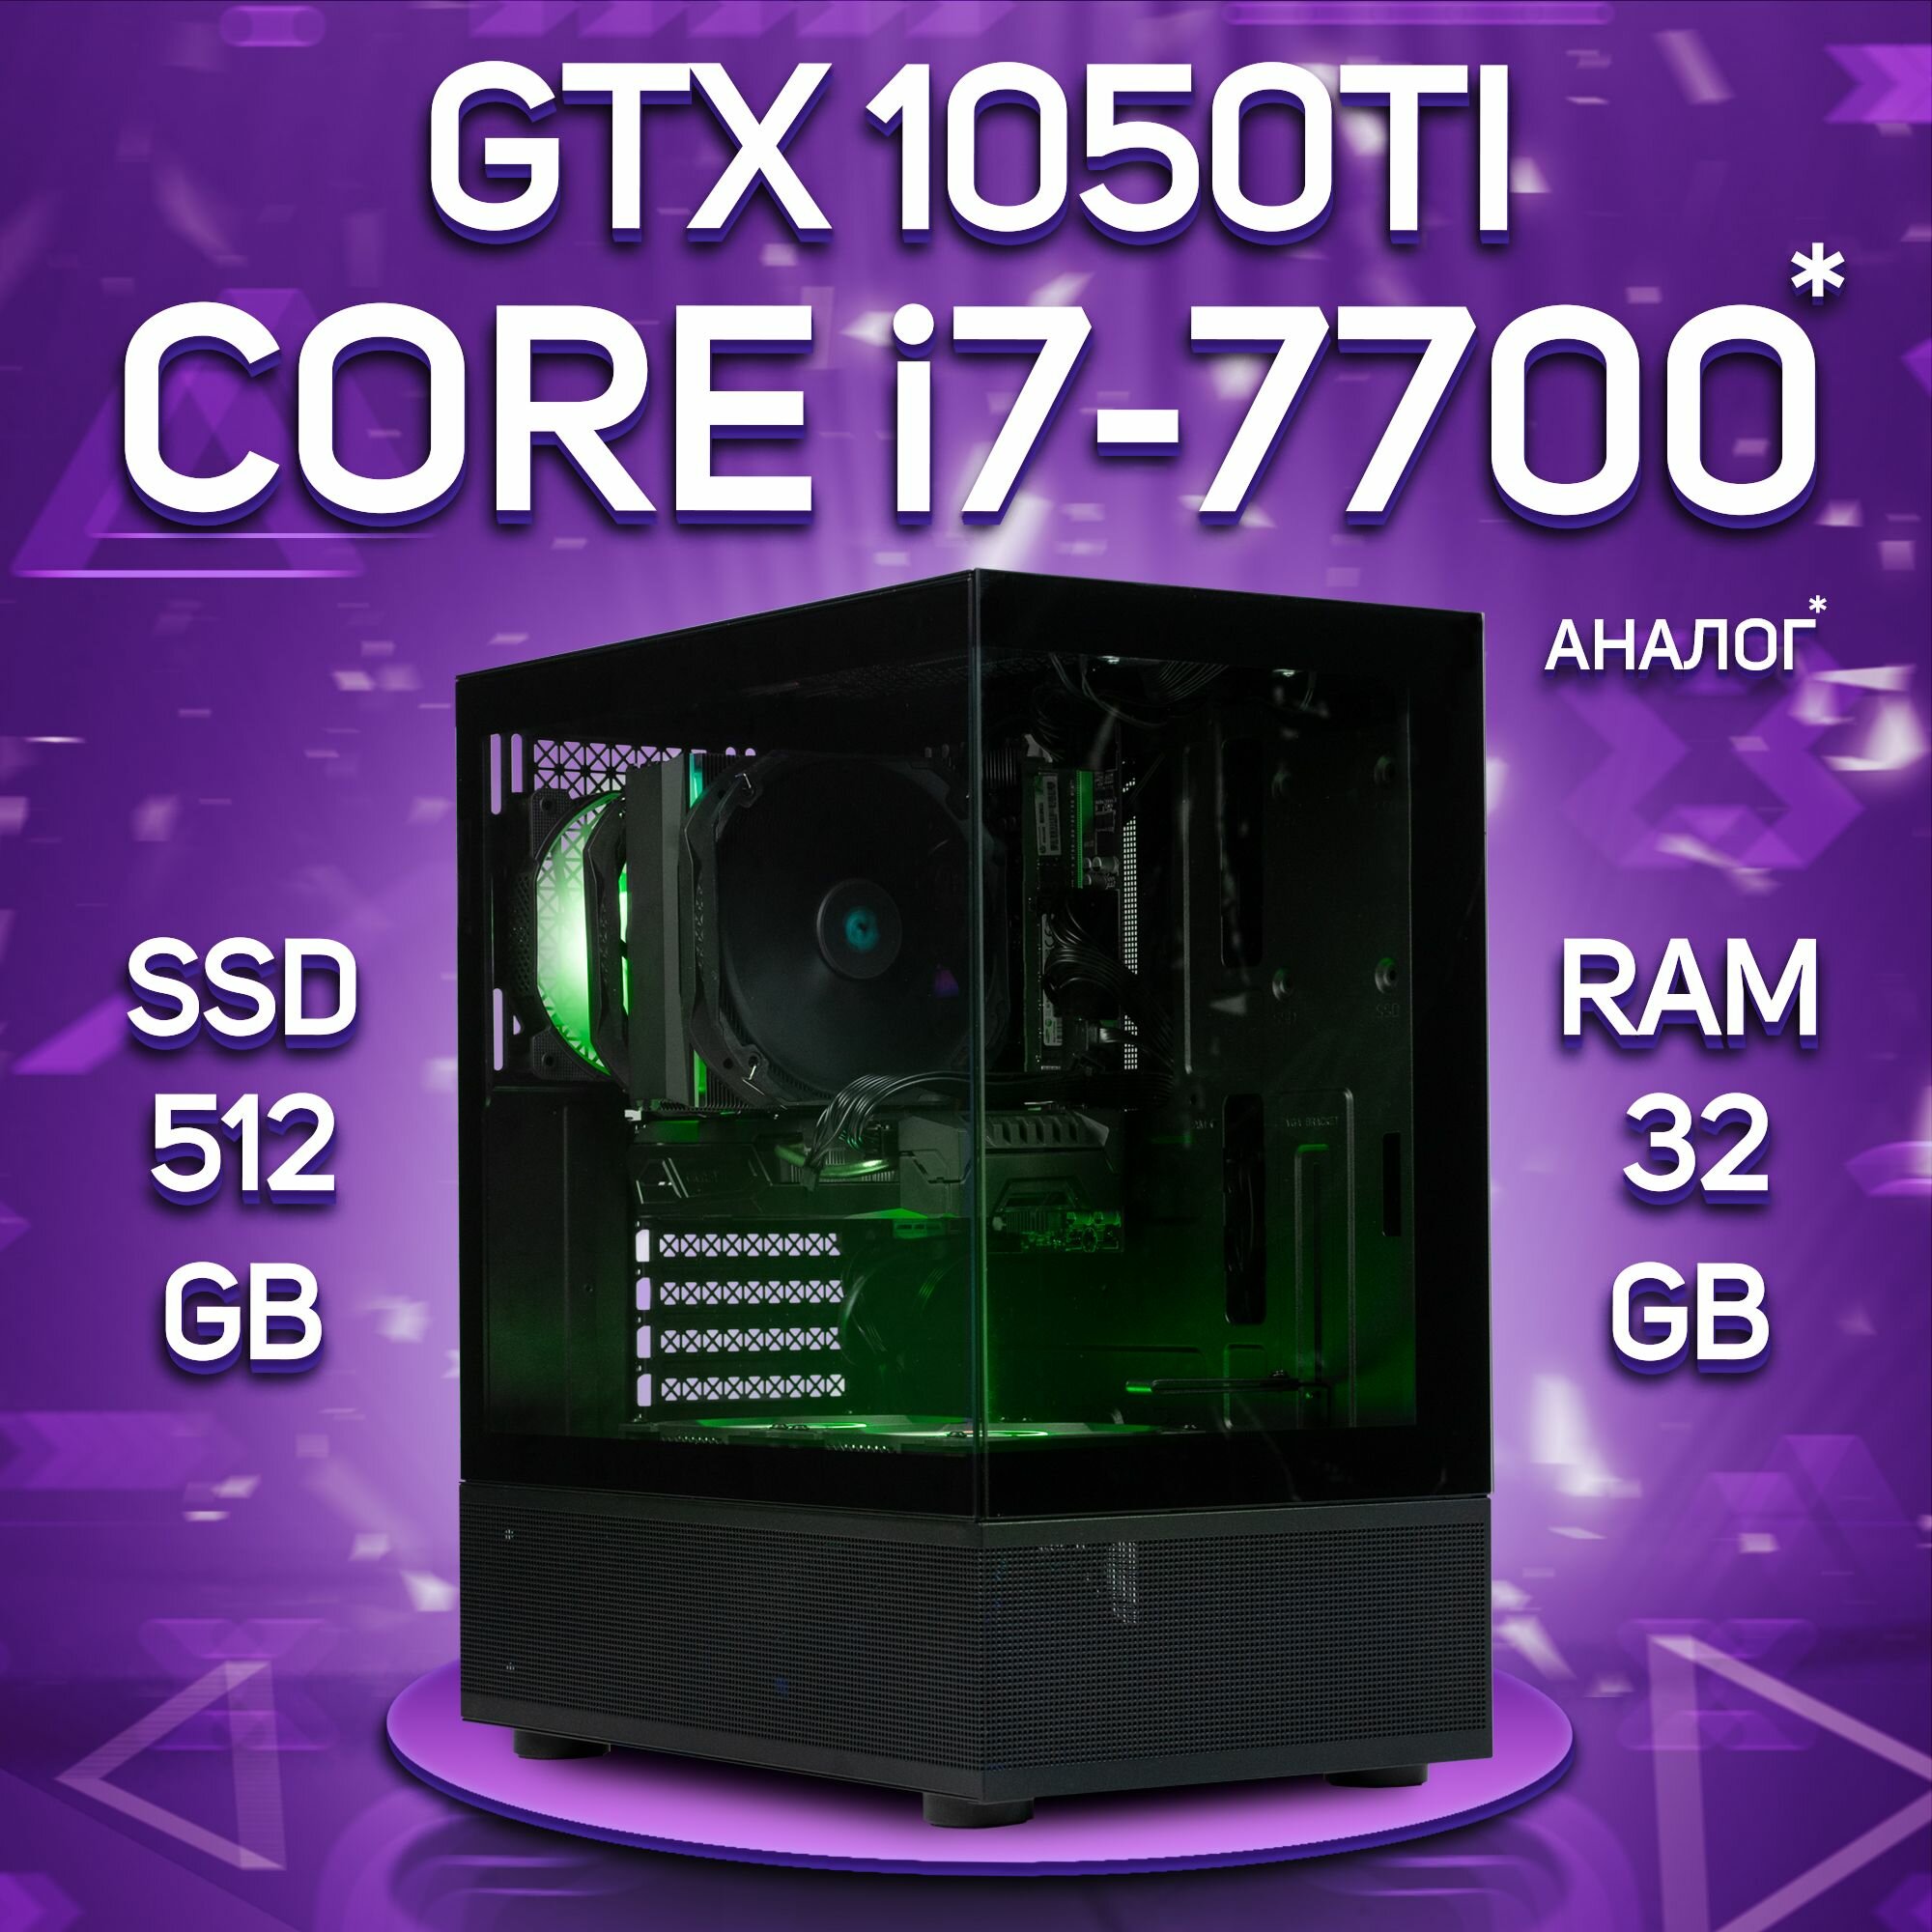 Компьютер Intel Core i7-7700 / NVIDIA GeForce GTX 1050 Ti (4 Гб), RAM 32GB, SSD 512GB